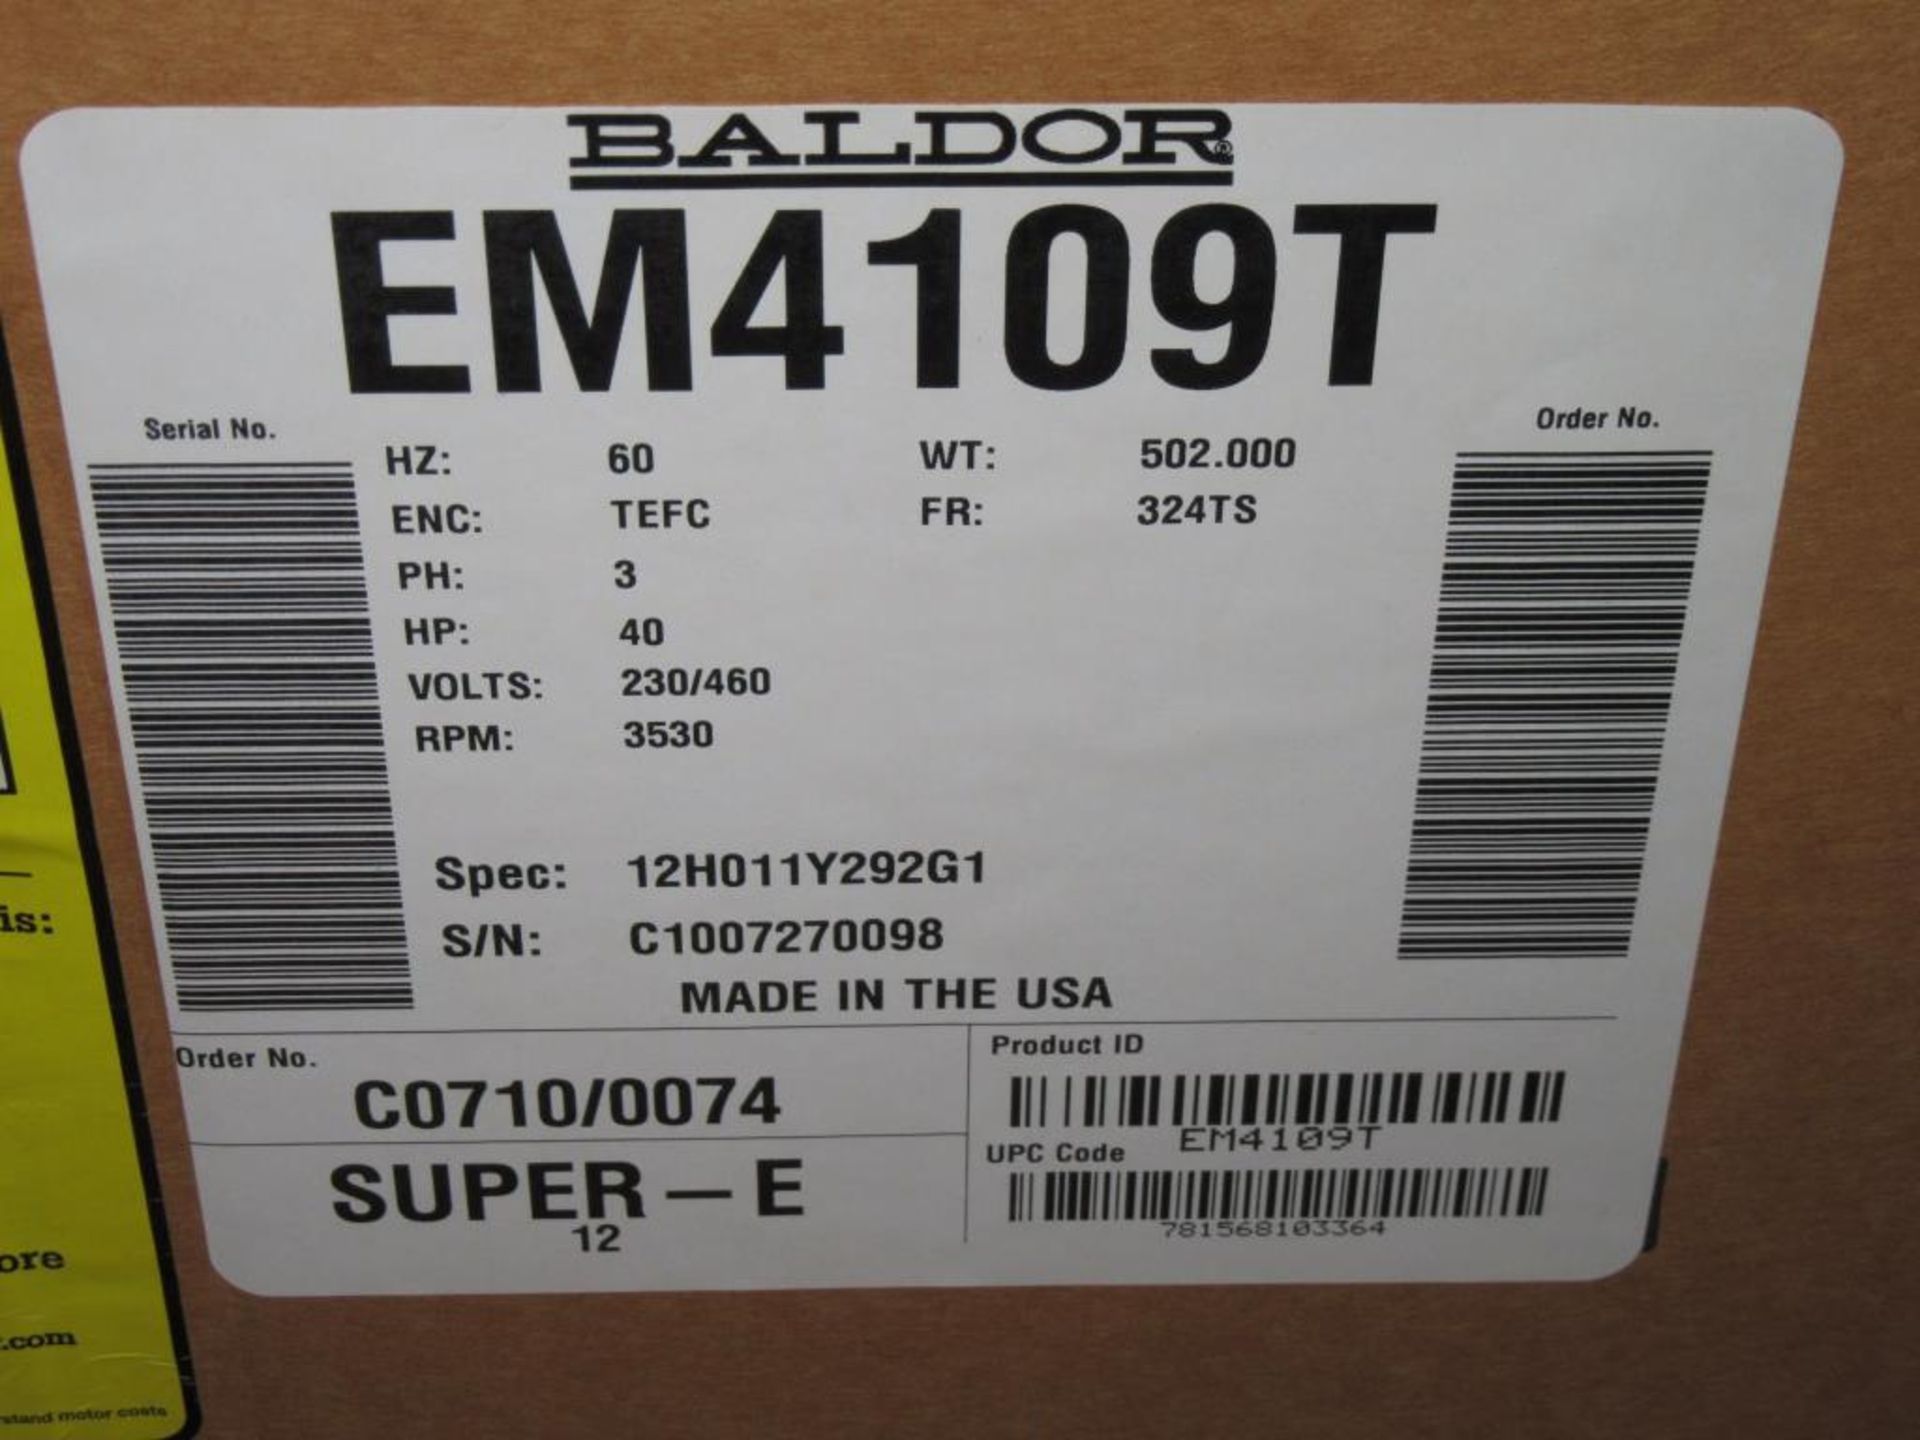 Baldor Motor; 40 HP Motor 230/460V Frame 324TS in Box on Pallet. HIT# 2217542. Loc: Maintenance Cage - Image 4 of 4